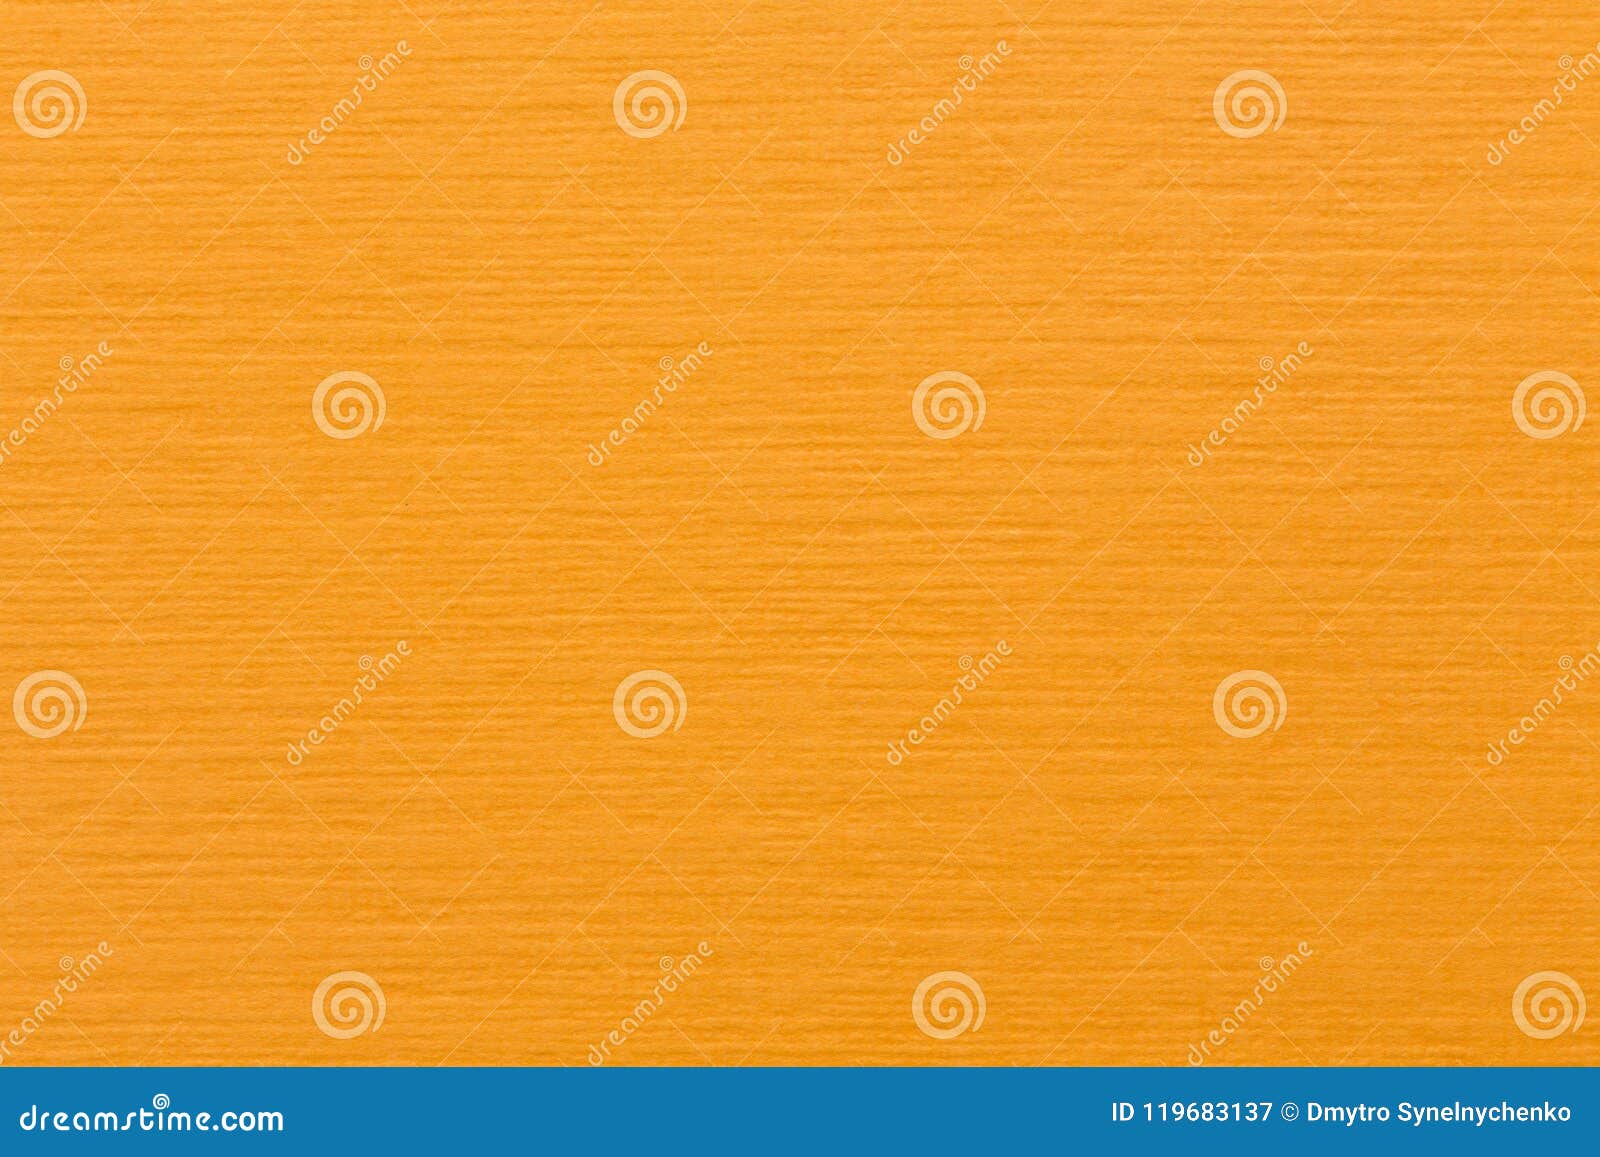 Orange Felt Fabric